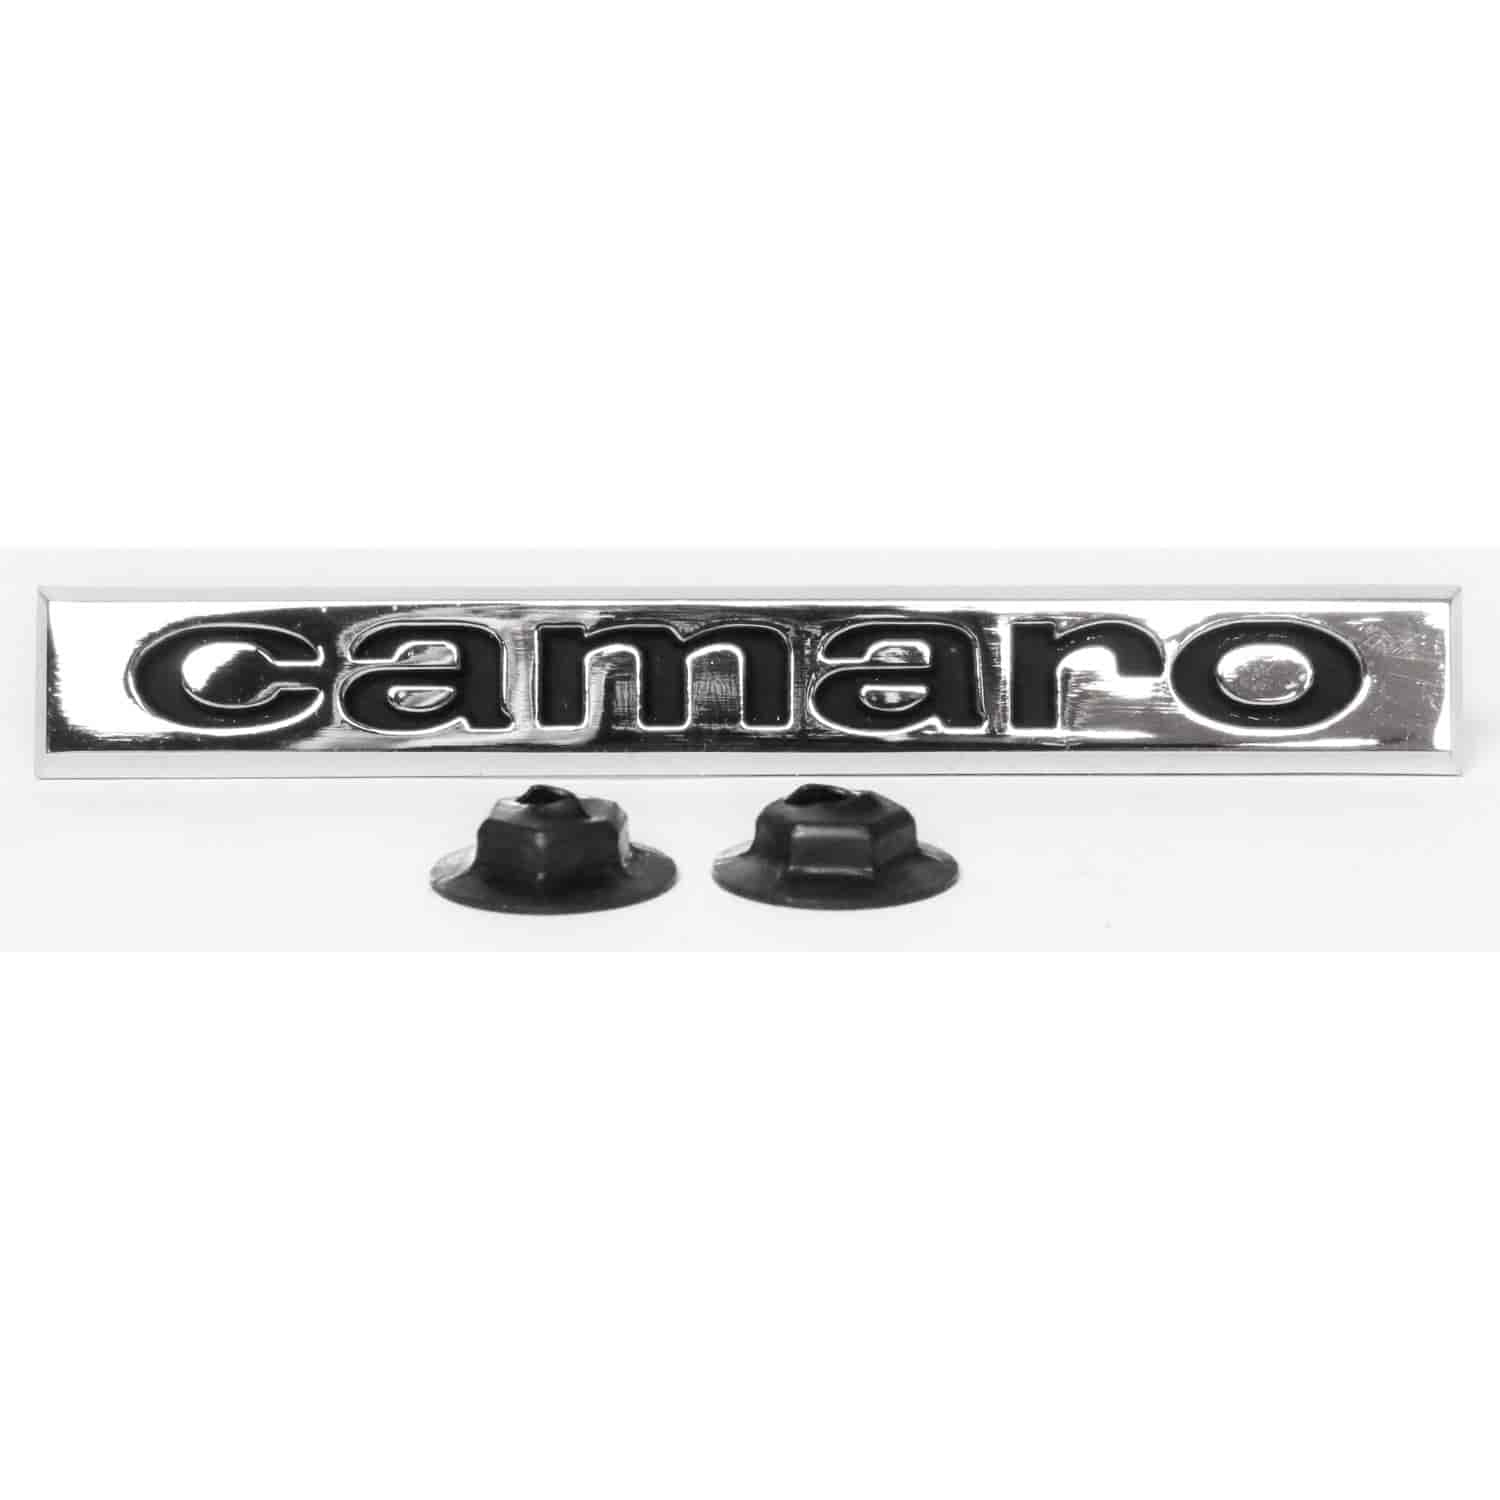 Header Panel/Trunk Lid Emblem "Camaro"